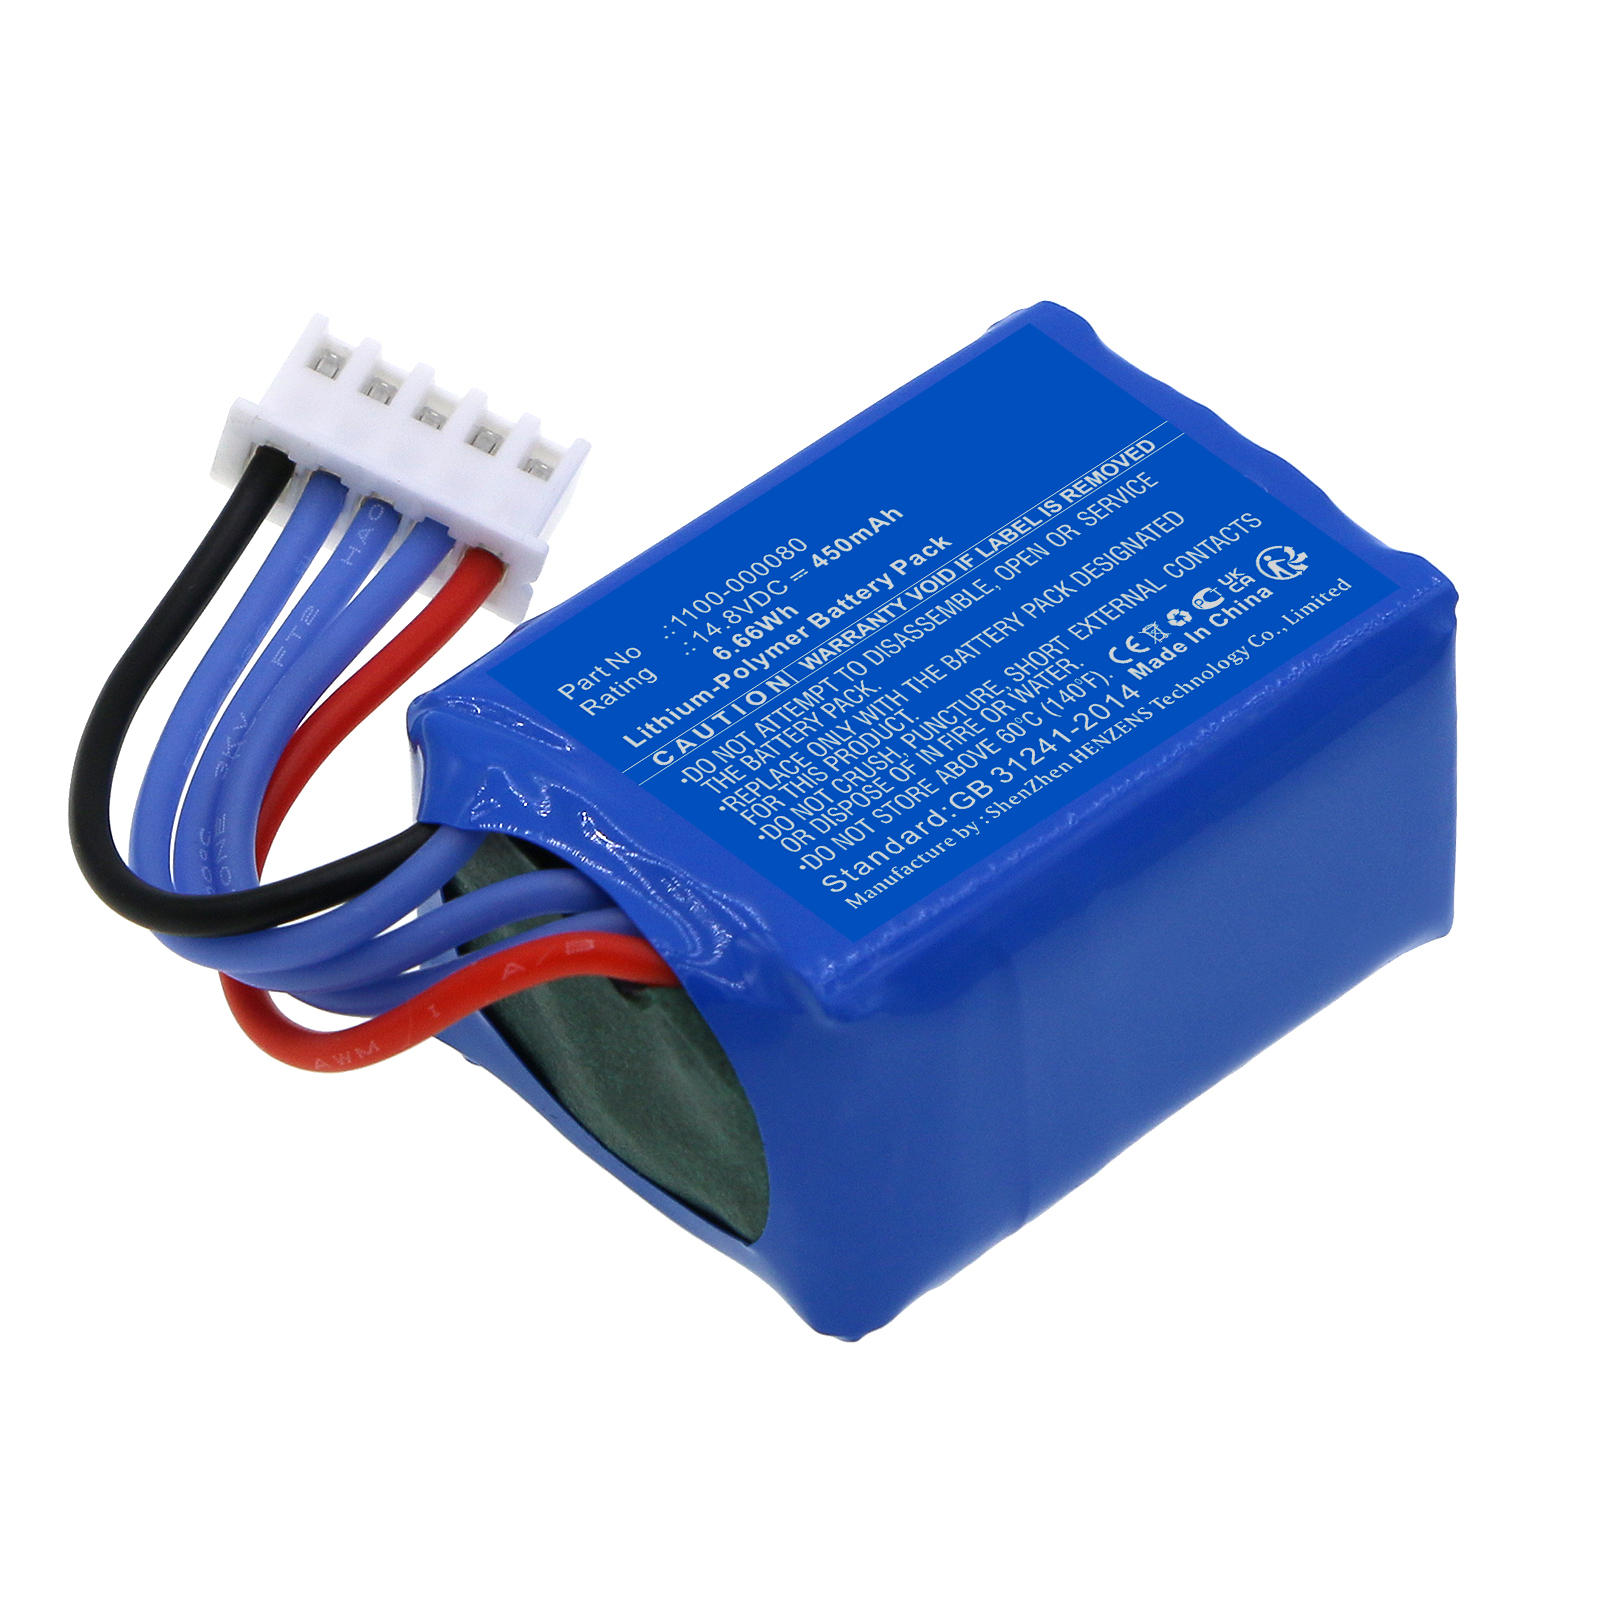 Synergy Digital Alarm System Battery, Compatible with WIR Elektronik 1100-000080 Alarm System Battery (Li-Pol, 14.8V, 450mAh)